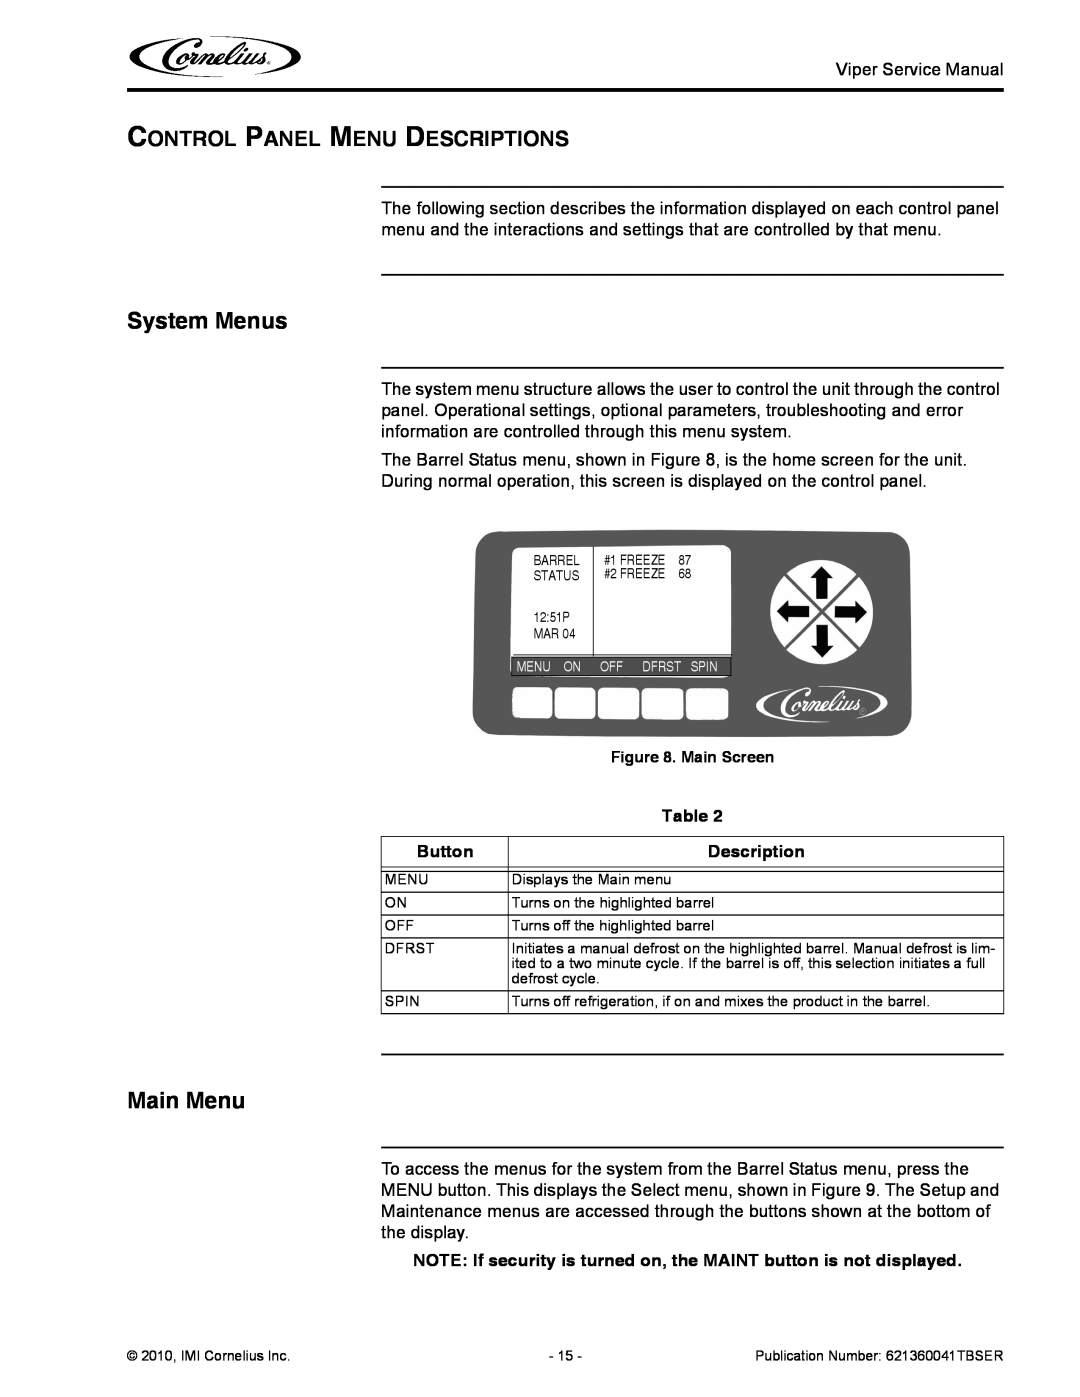 Cornelius 3 service manual System Menus, Main Menu, Control Panel Menu Descriptions, Button 